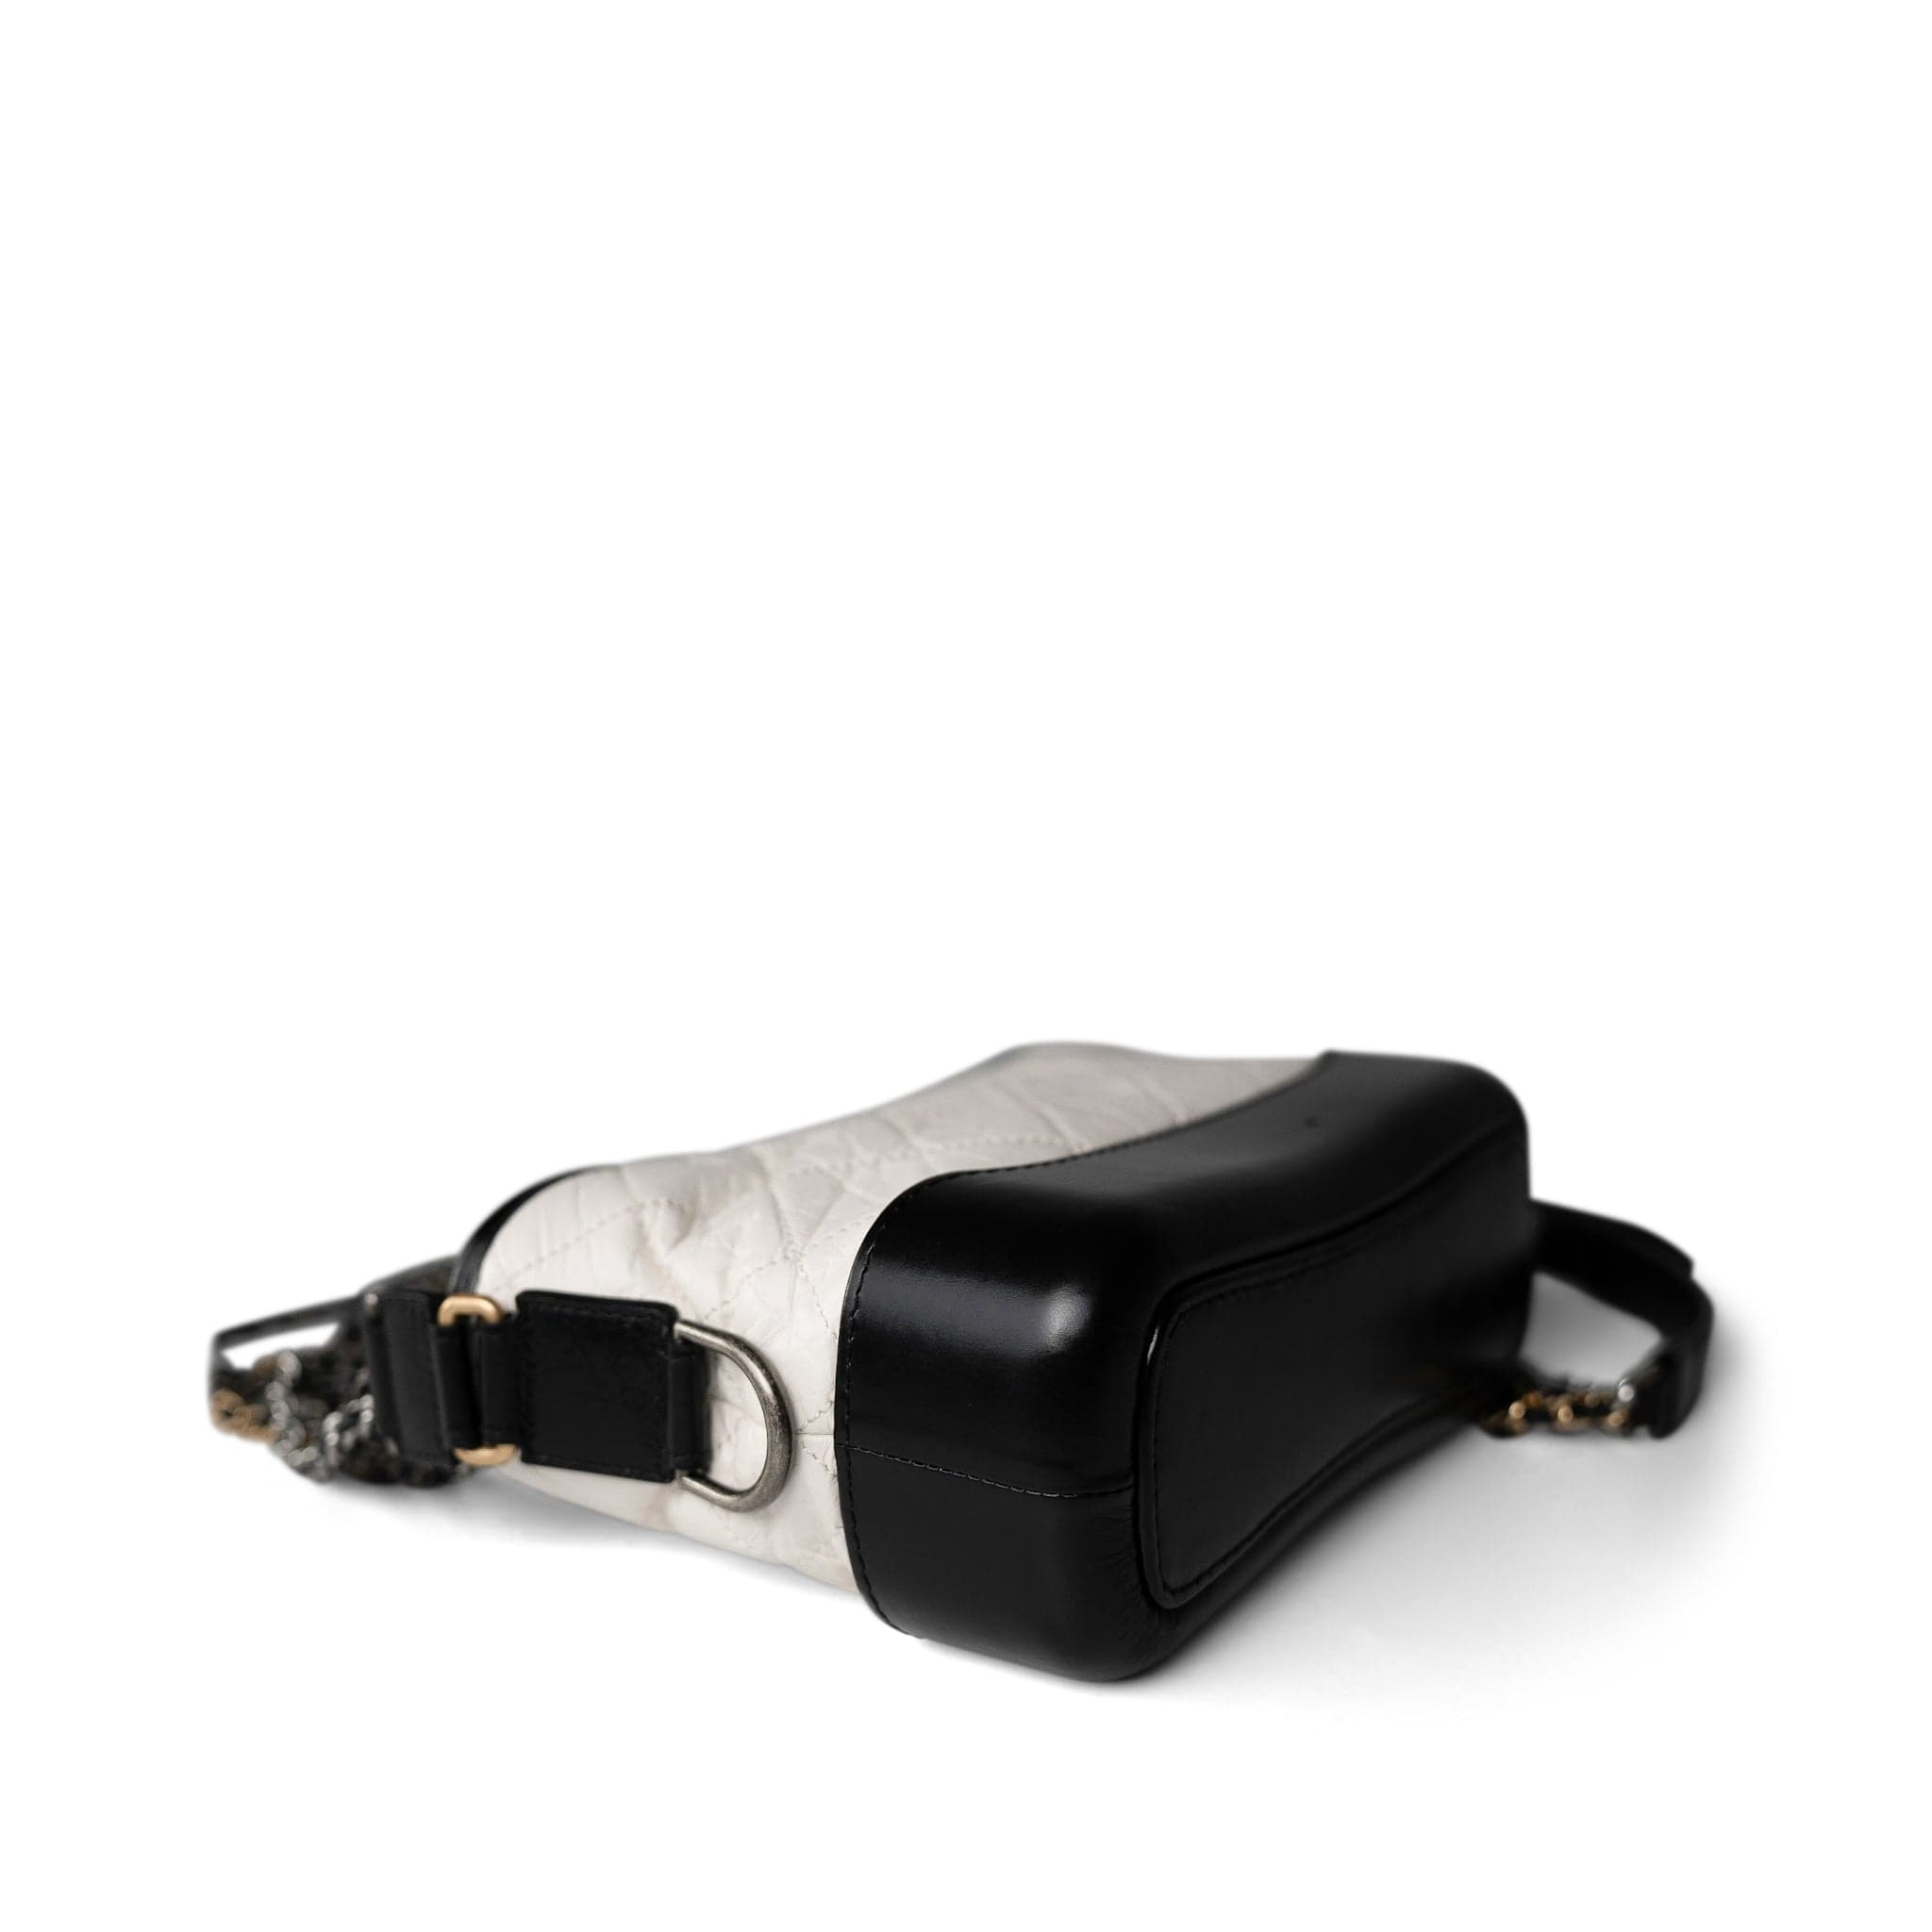 CHANEL Handbag Multicolor Gabrielle Hobo Bag White Black Mini Mixed Hardware - Redeluxe